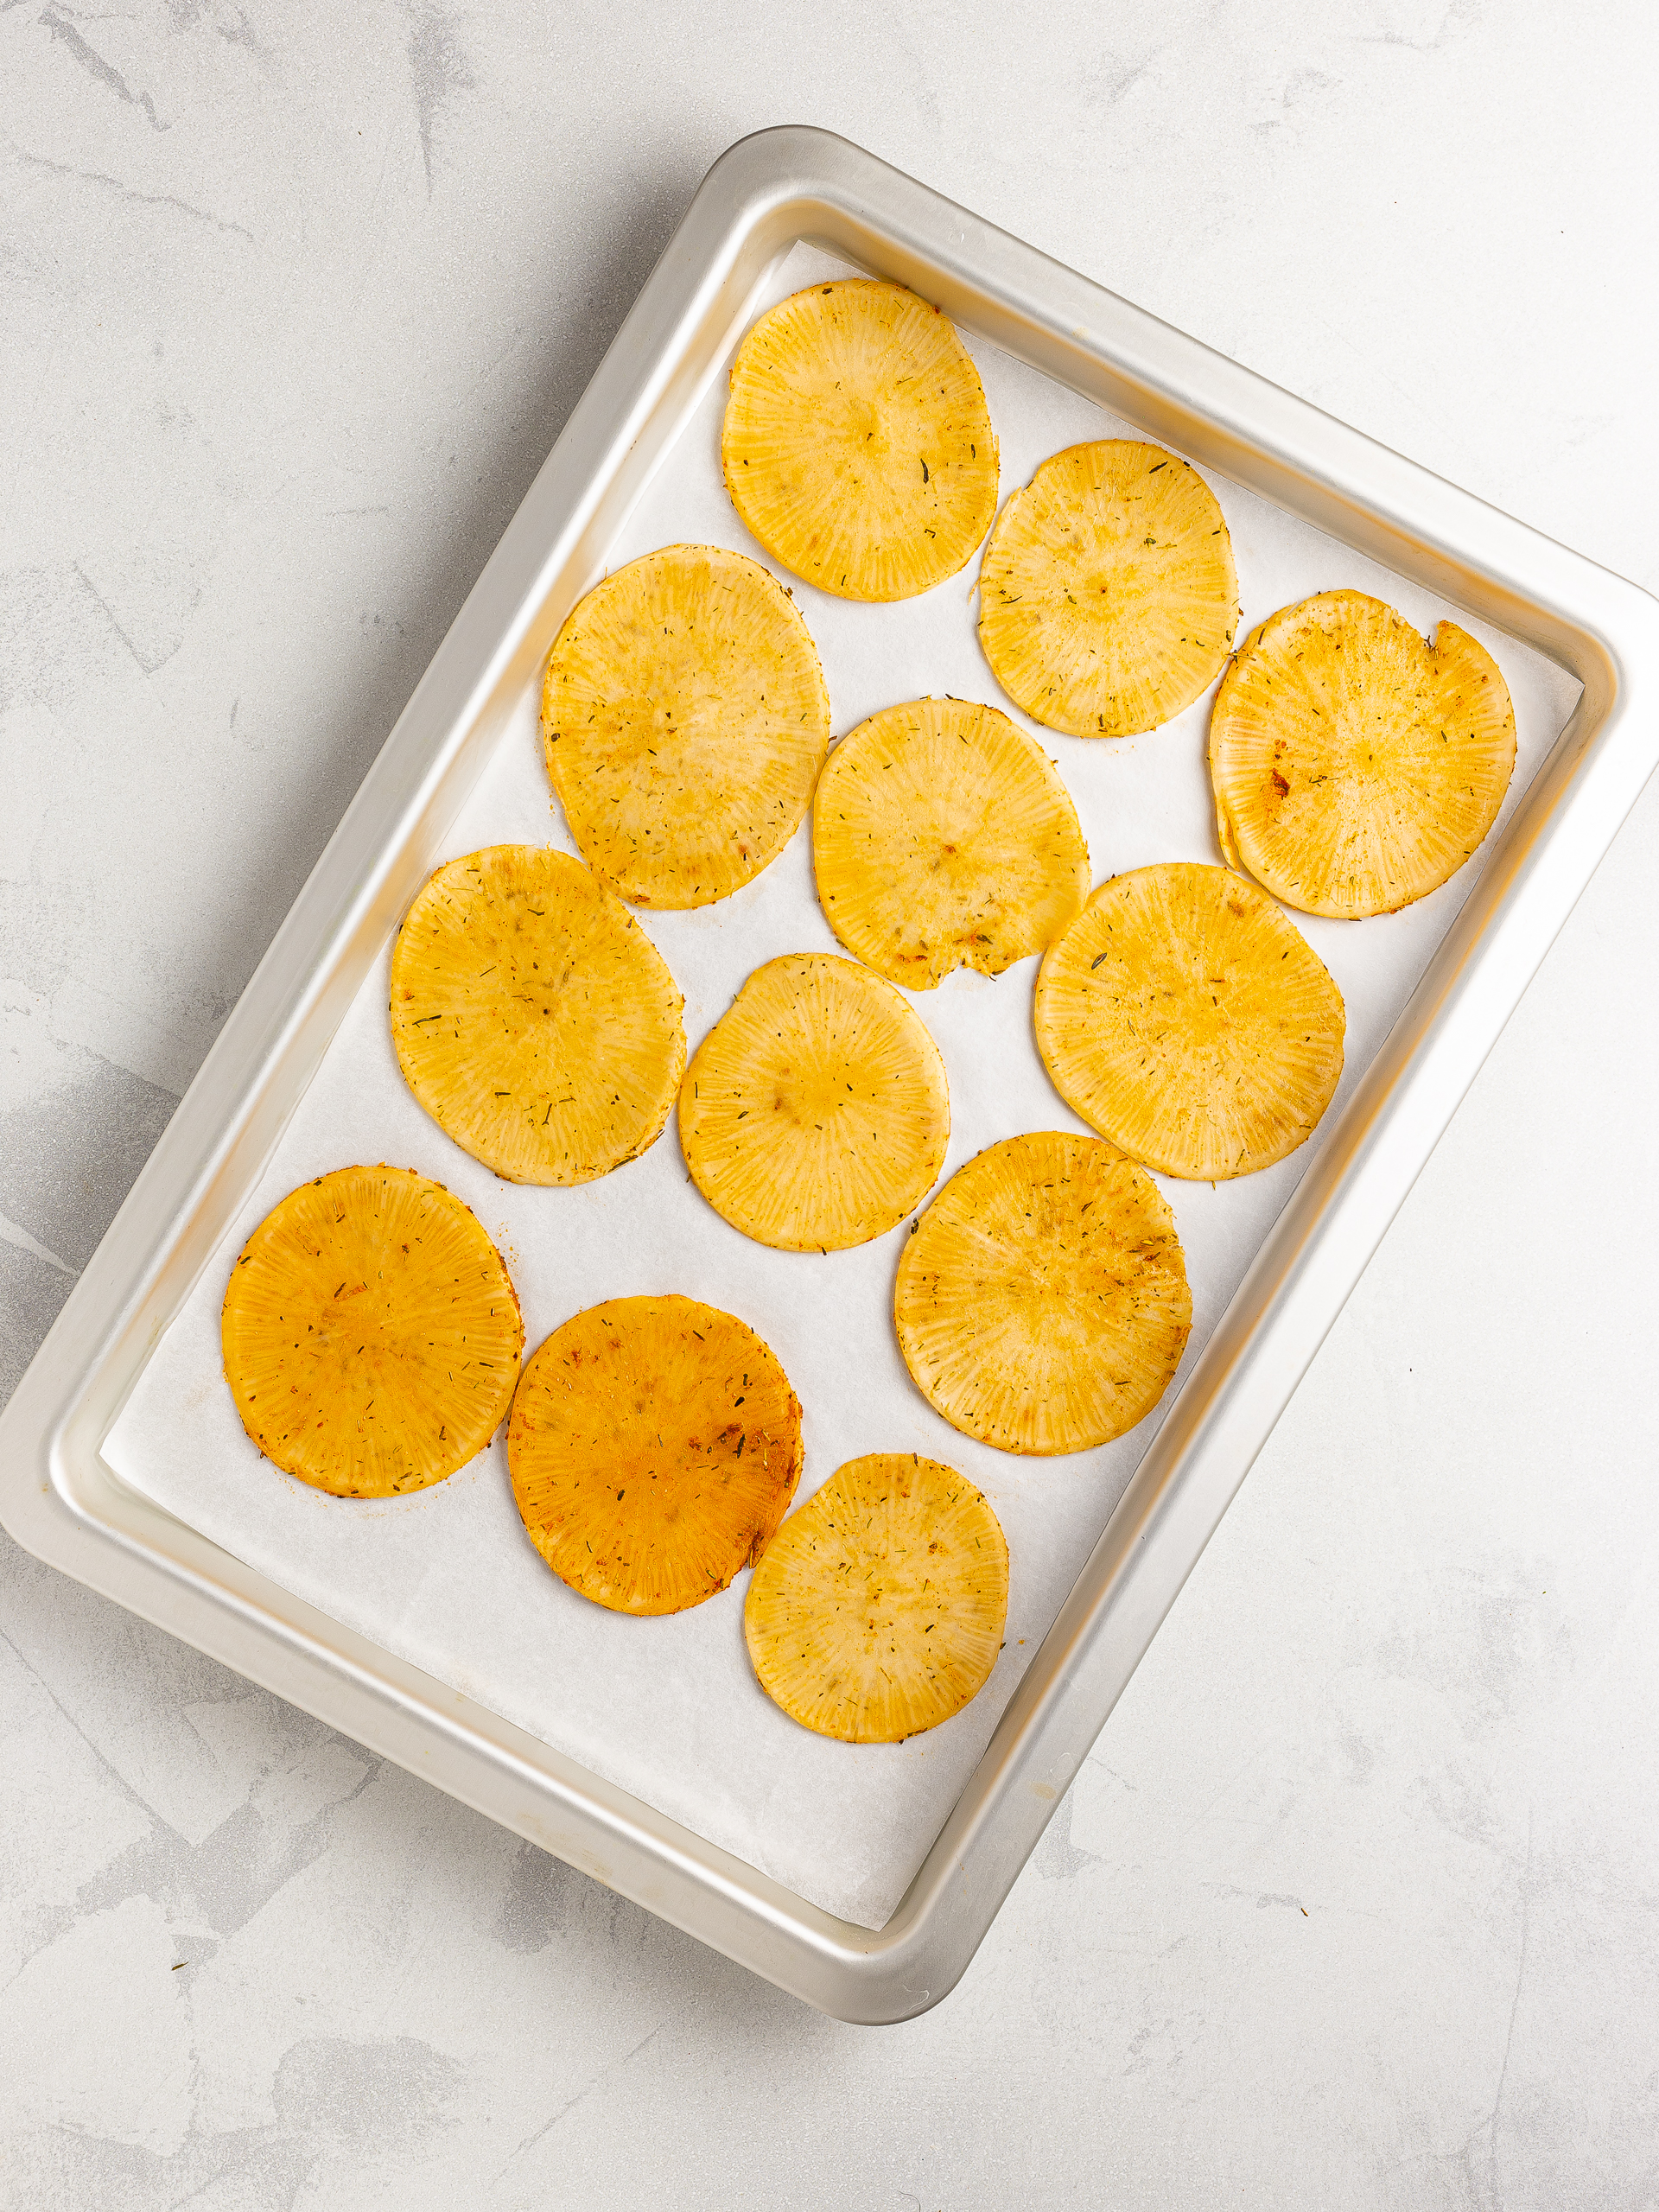 daikon chips on a baking tray